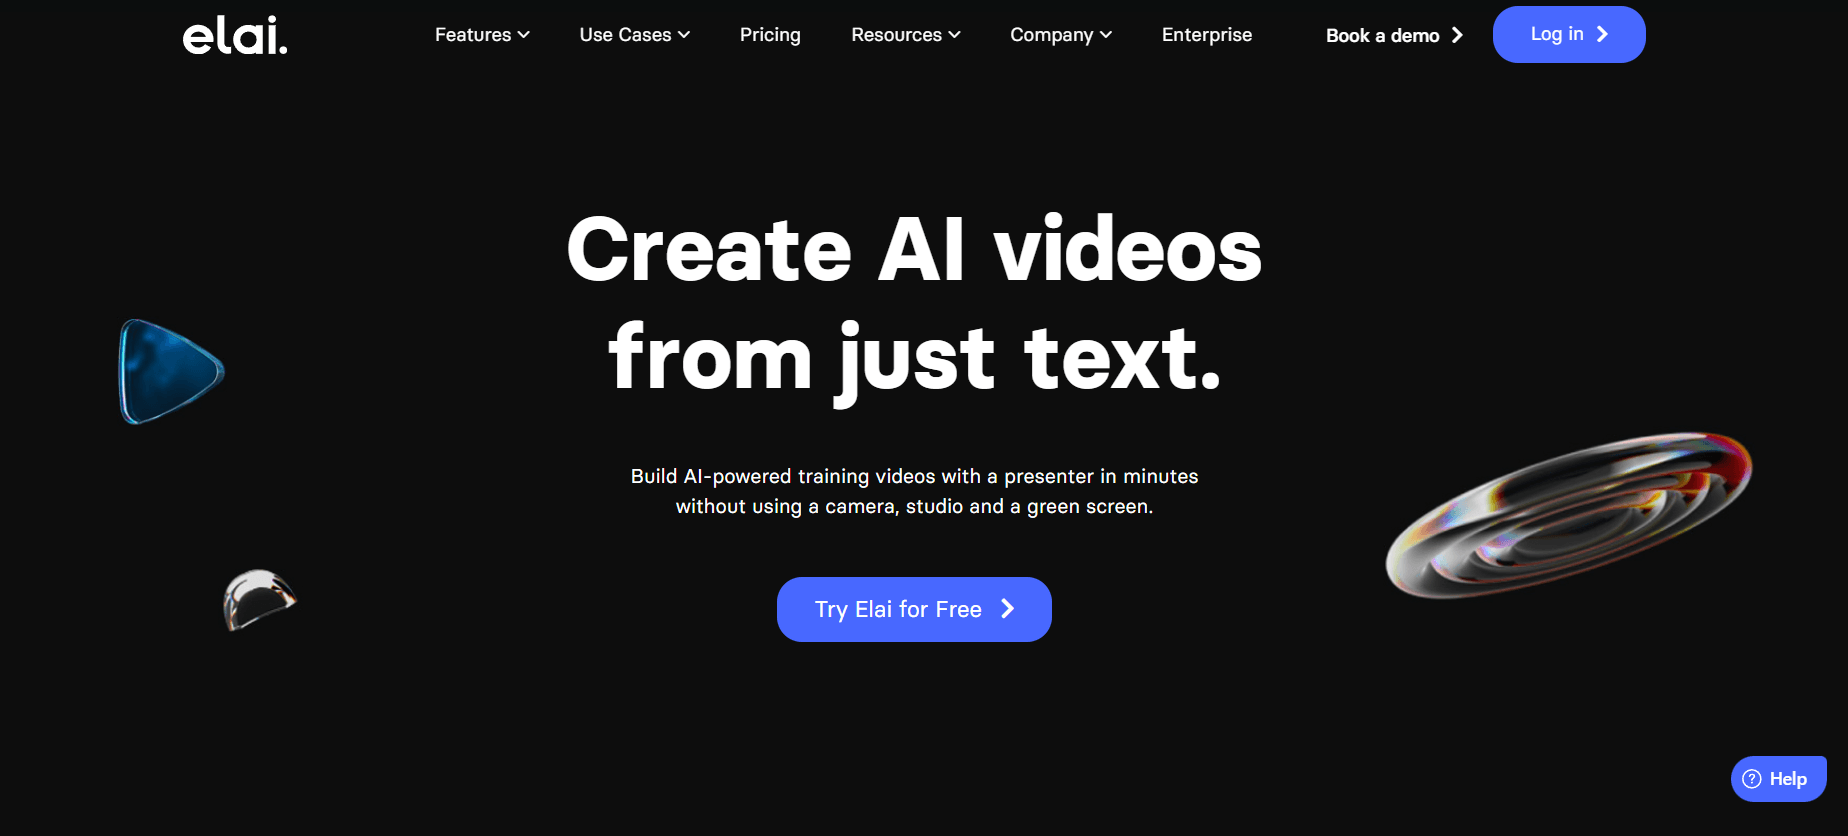 Outils IA de génération vidéo : Elai.io